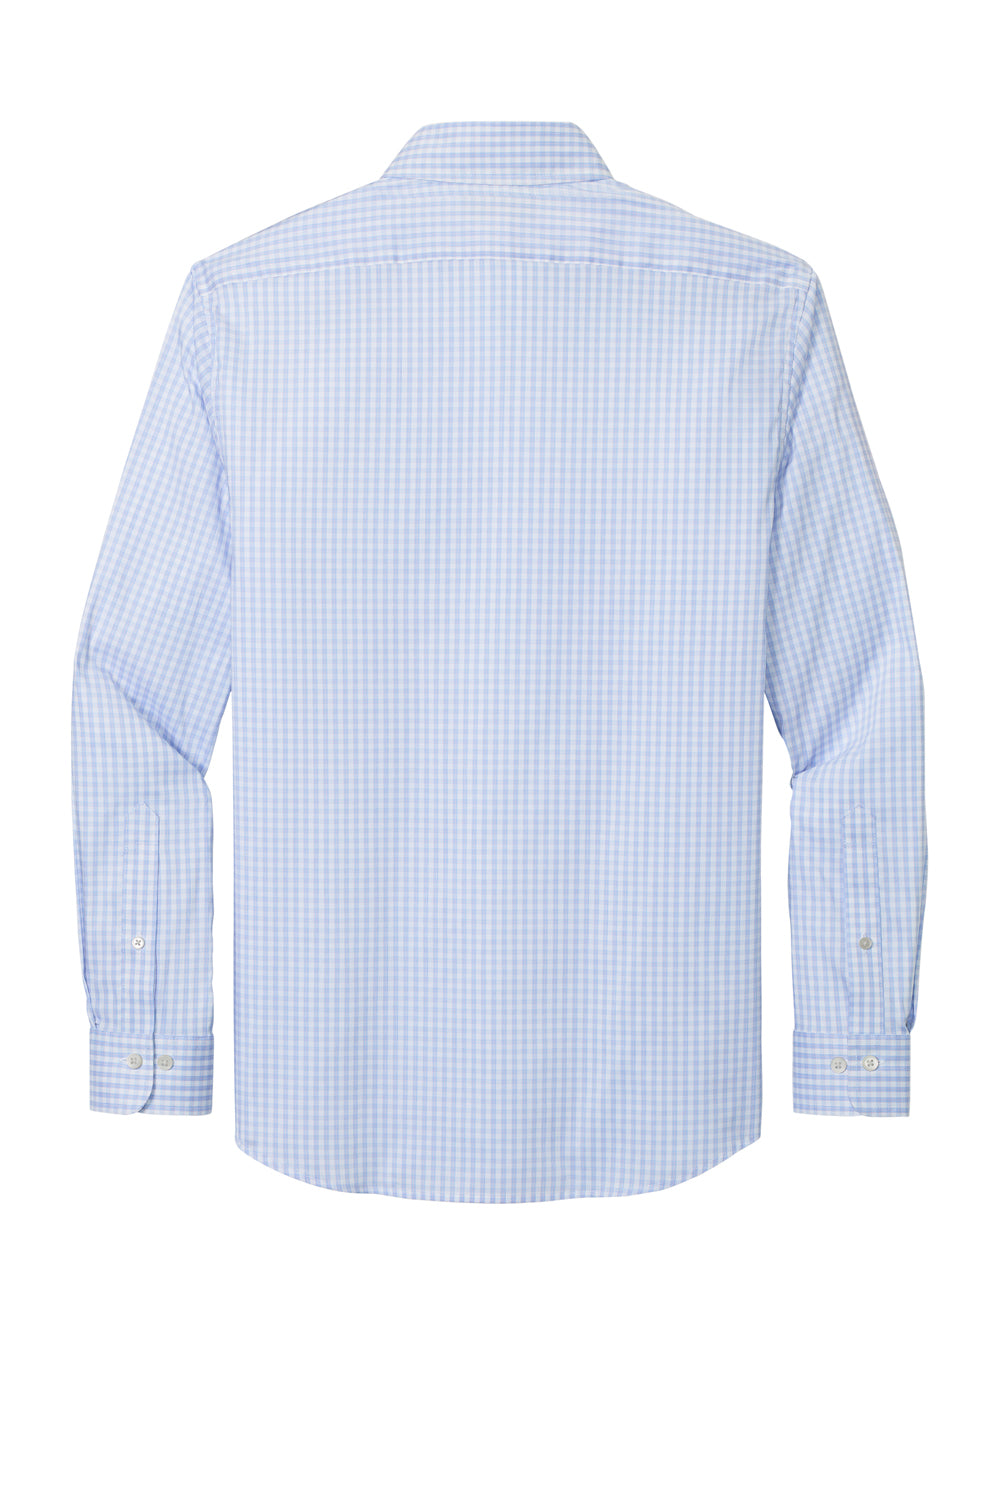 Brooks Brothers Mens Tech Stretch Long Sleeve Button Down Shirt Newport Blue/Pearl Pink Flat Back